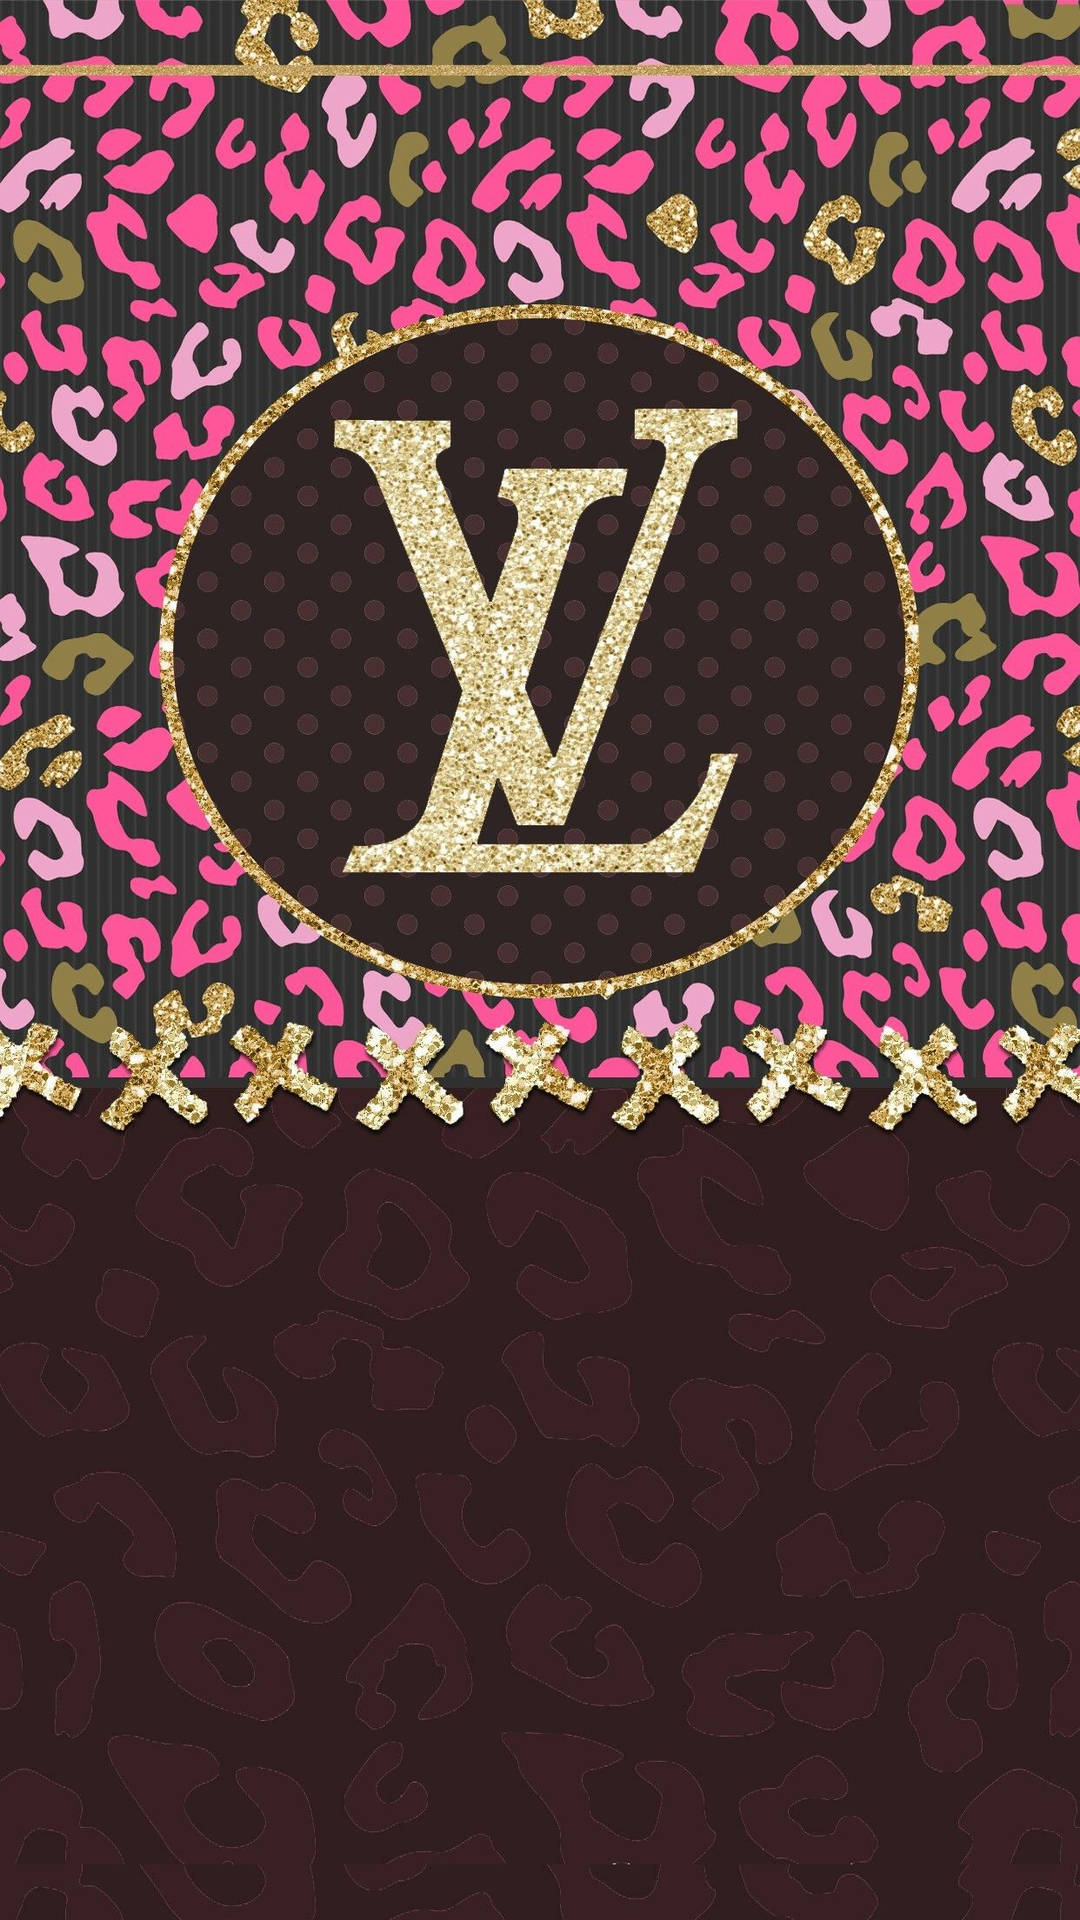 Louis Vuitton wallpaper by MissMedusa  Download on ZEDGE  2e41